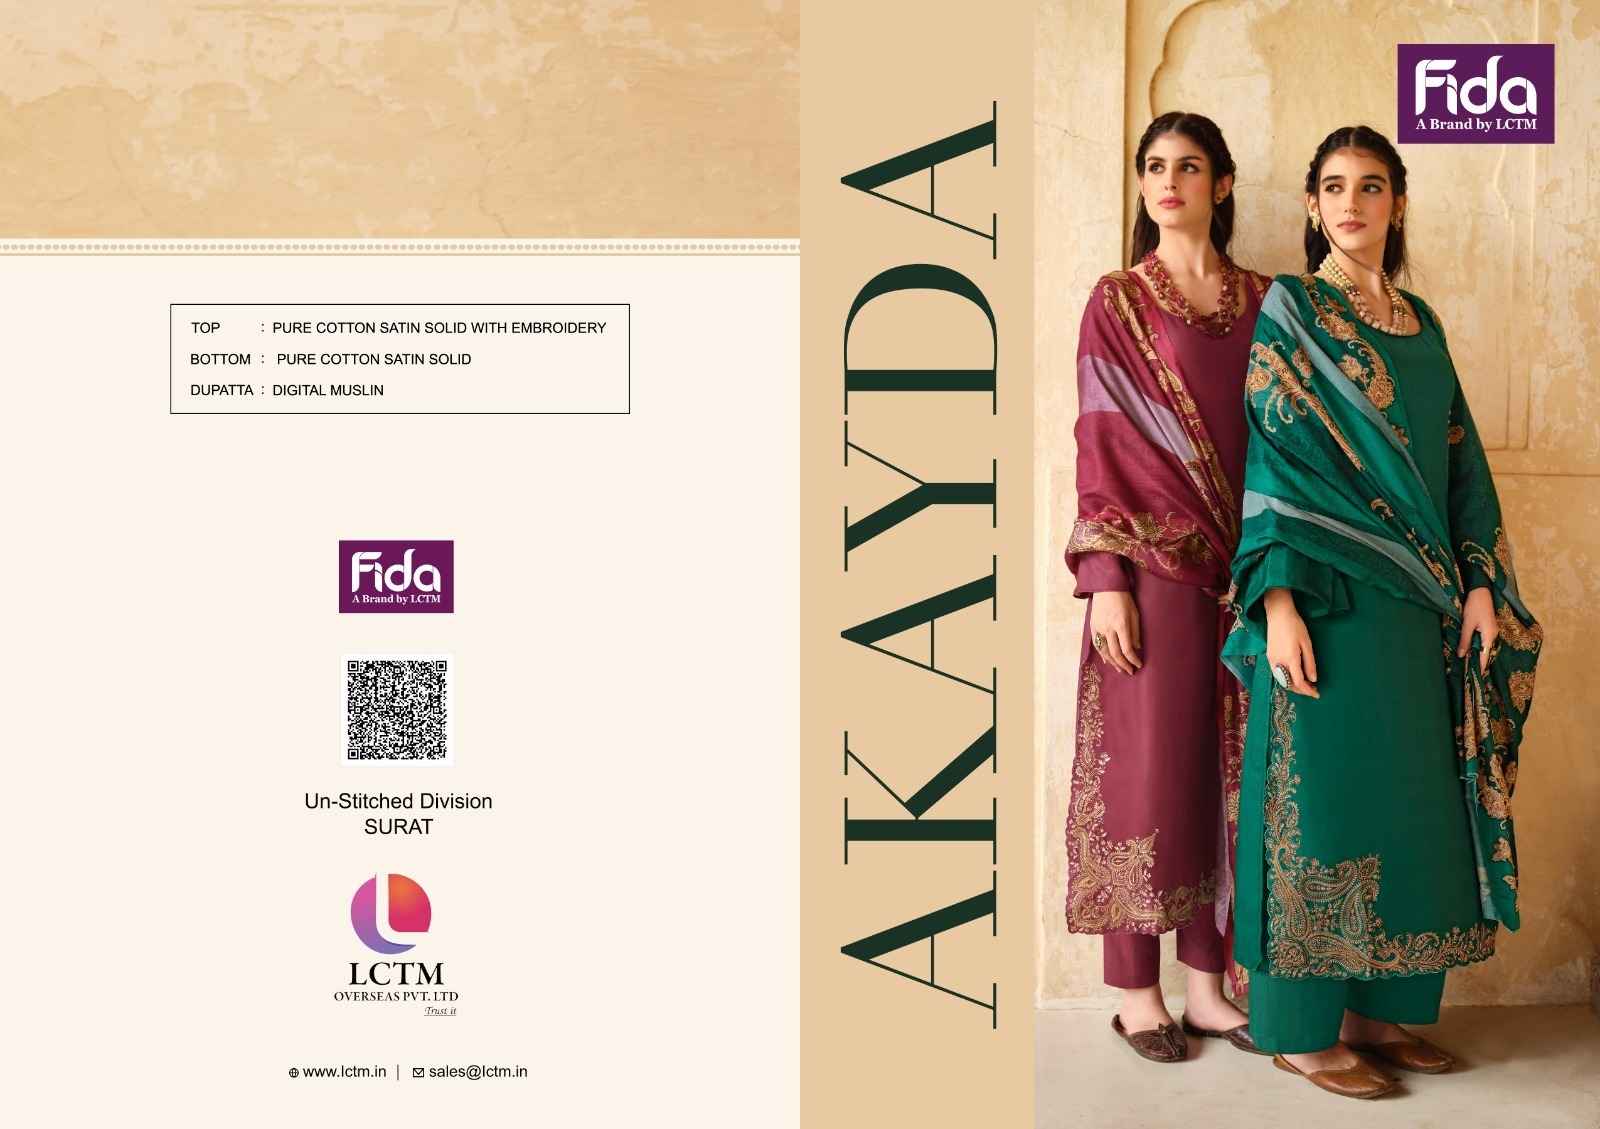 Fida Akayda Cotton Dress Material 6 pcs Catalogue